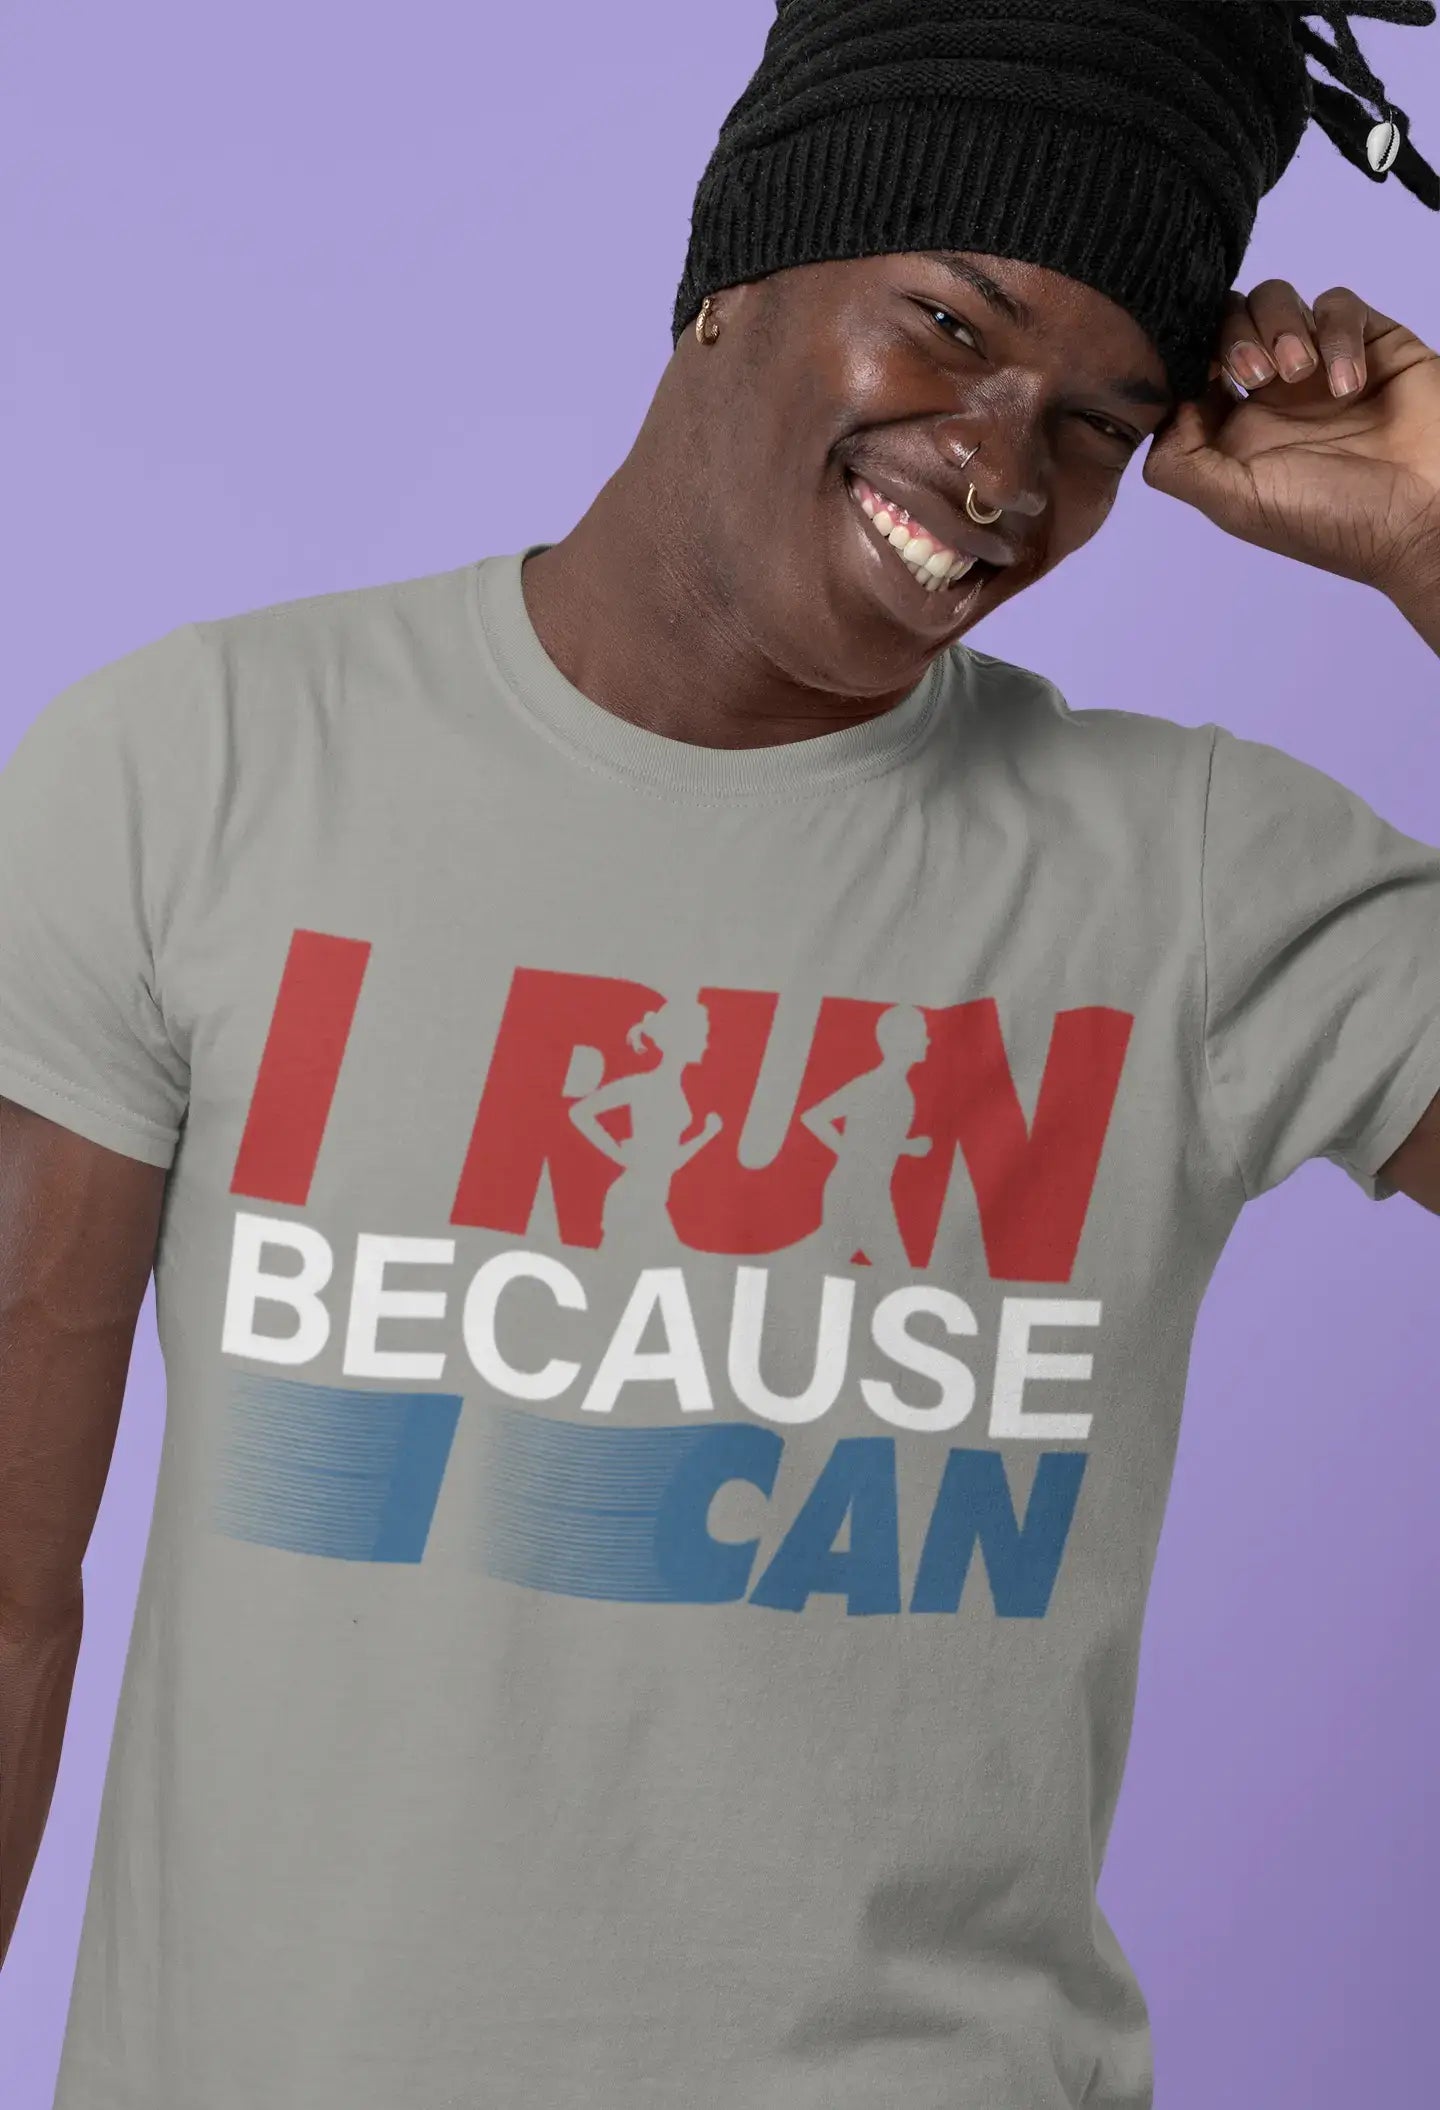 ULTRABASIC Men's Novelty T-Shirt I Run Because I Can - Runner Tee Shirt